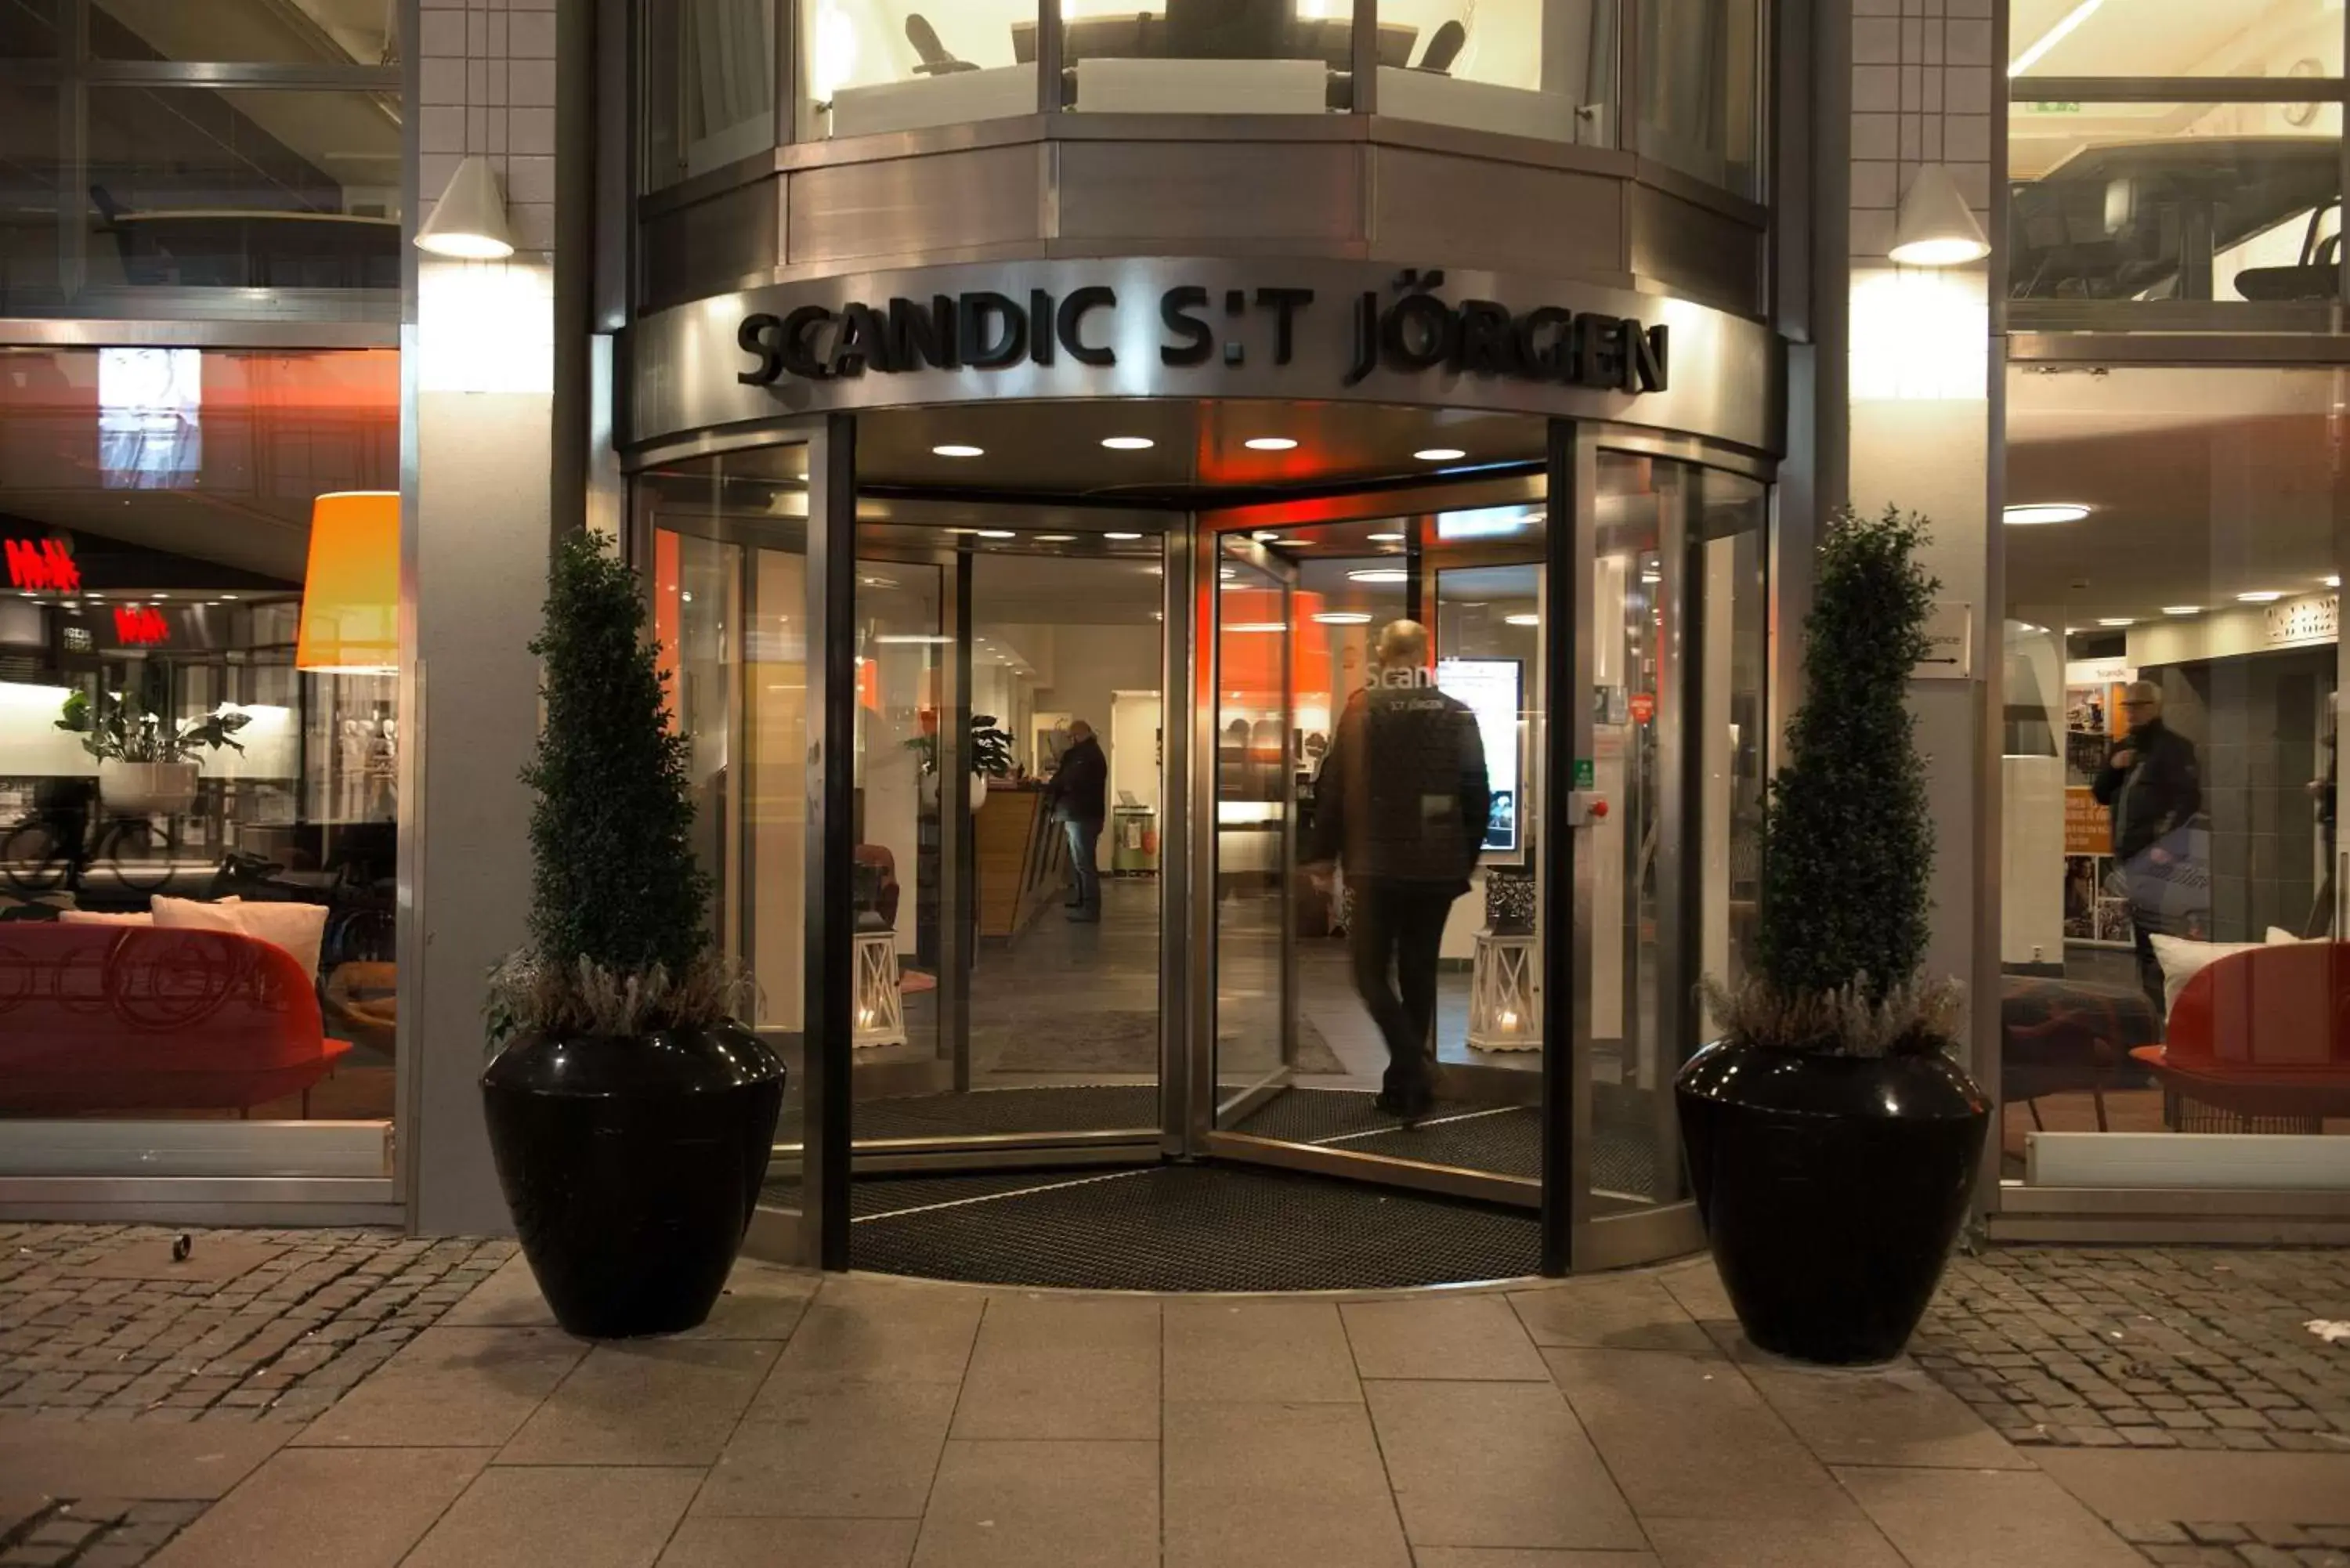 Facade/entrance in Scandic S:t Jörgen